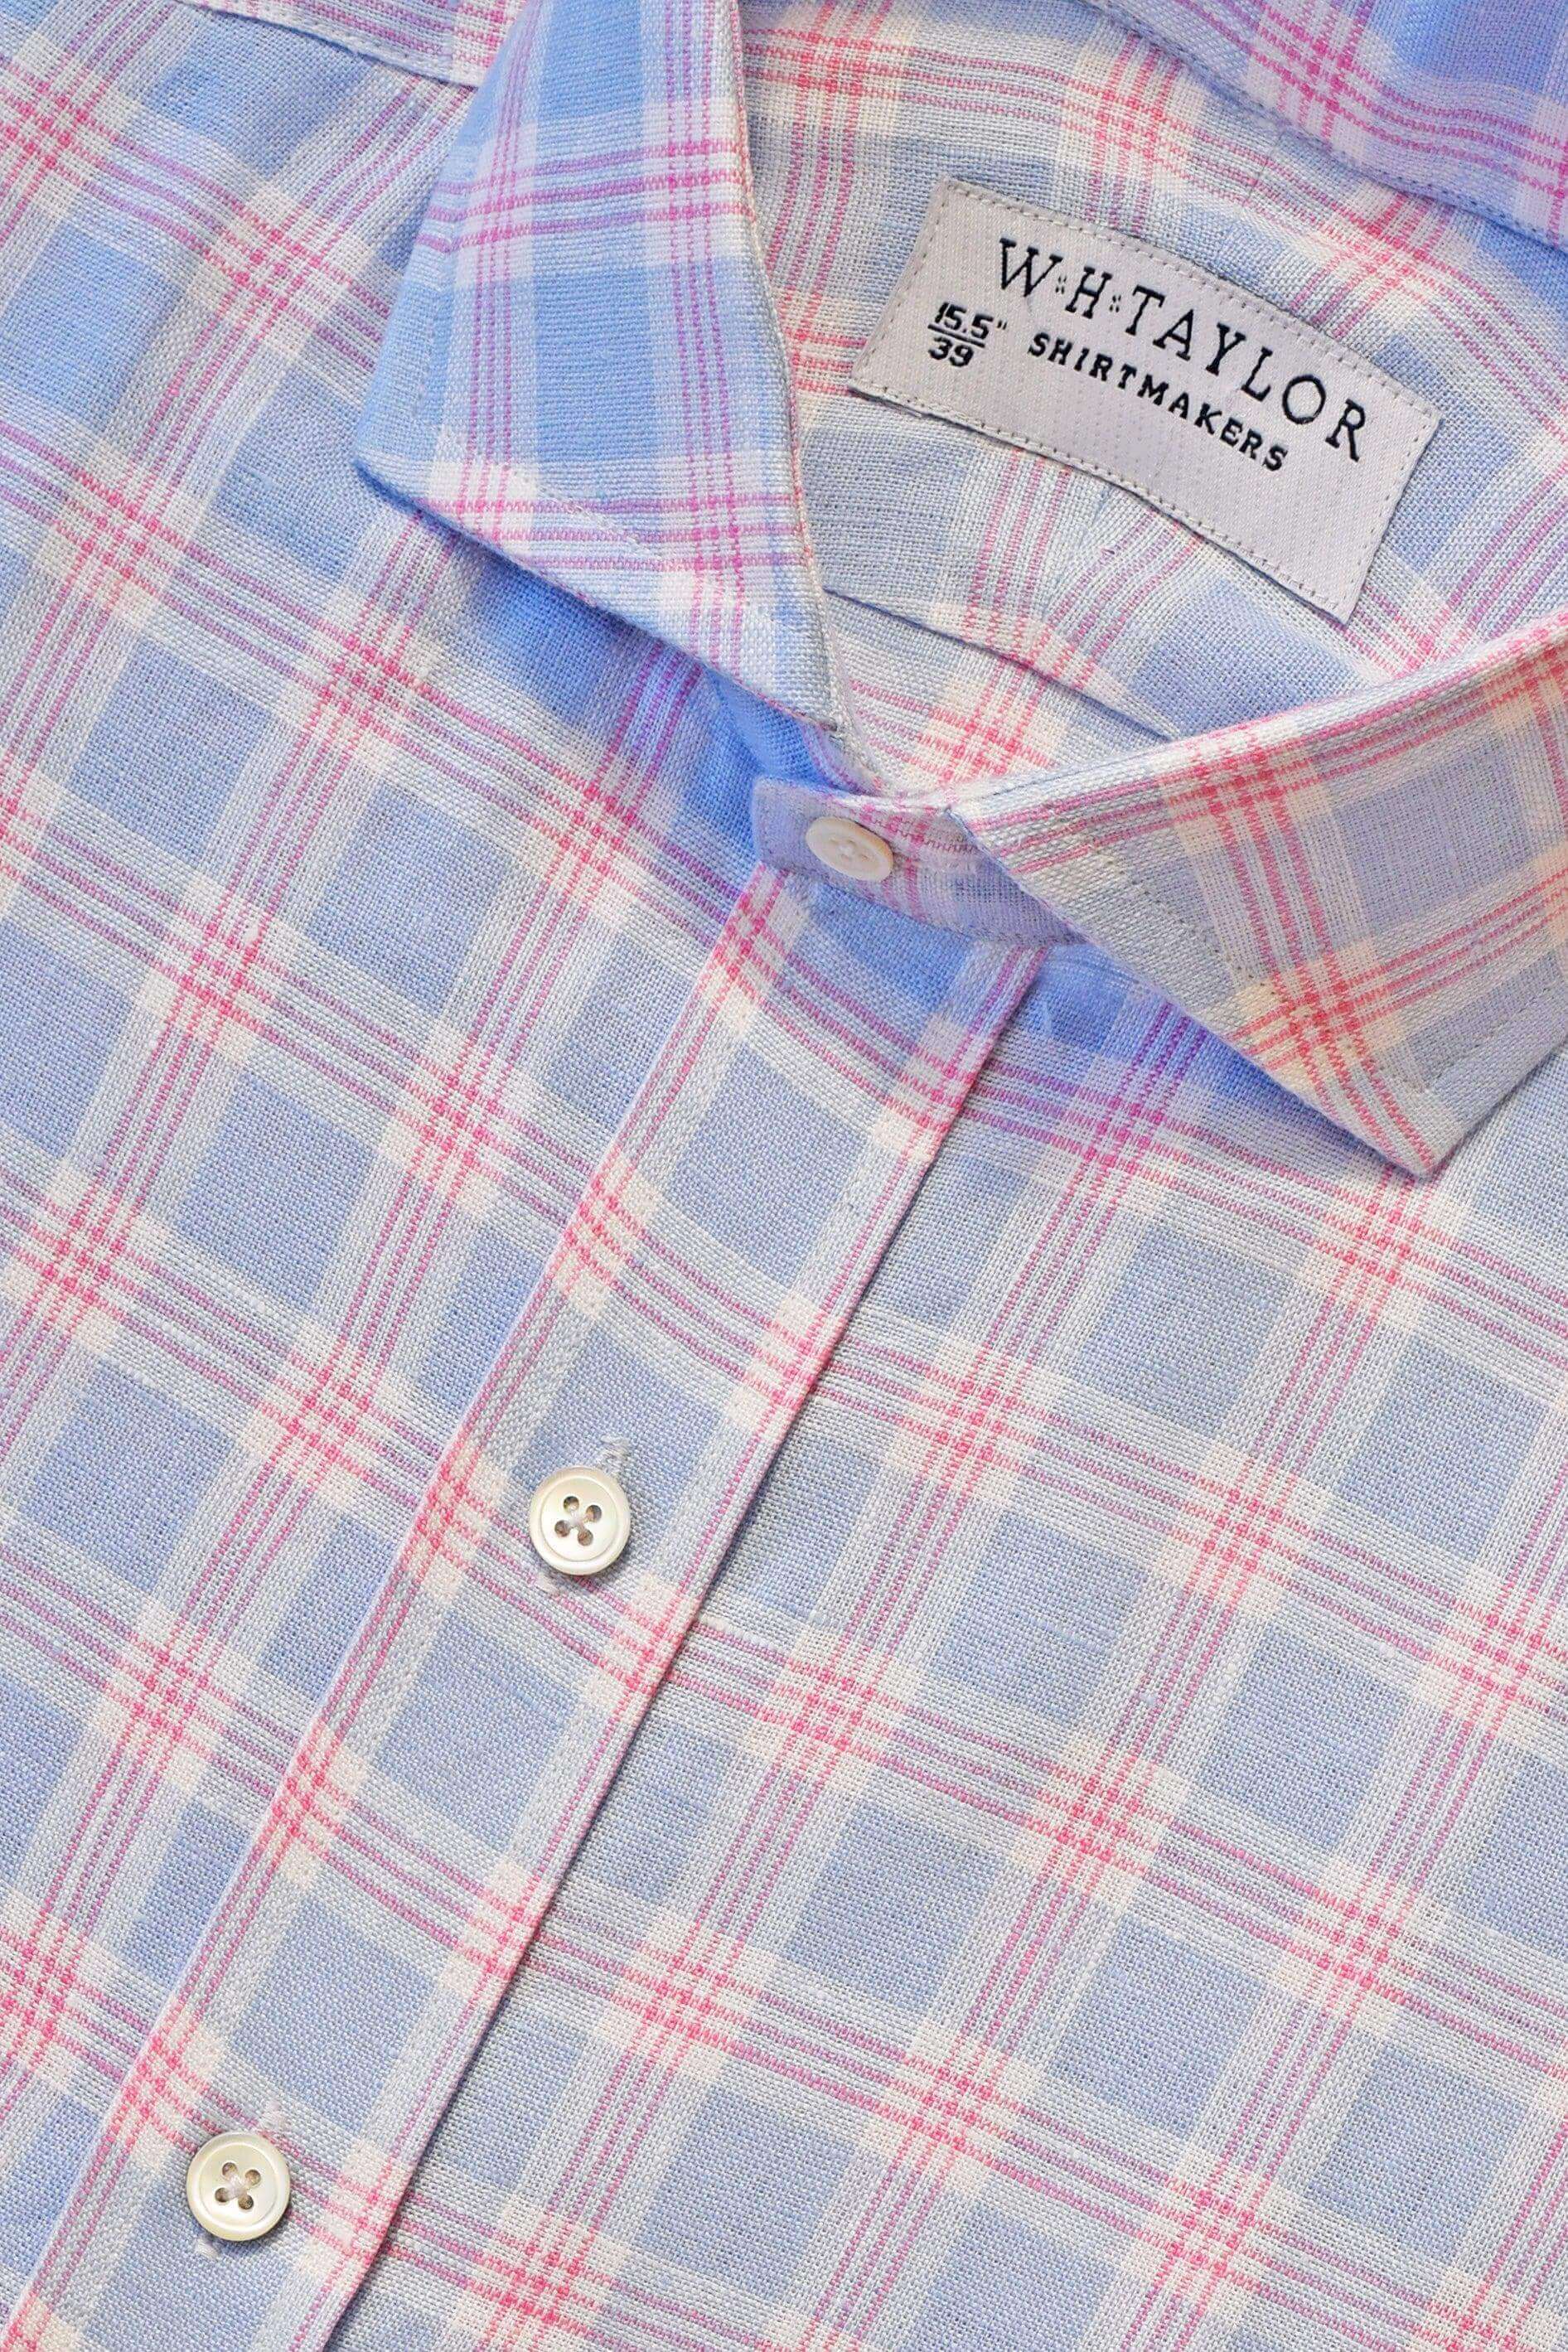 Sky & Pink Plaid Check Linen Men's Bespoke Shirt - whtshirtmakers.com